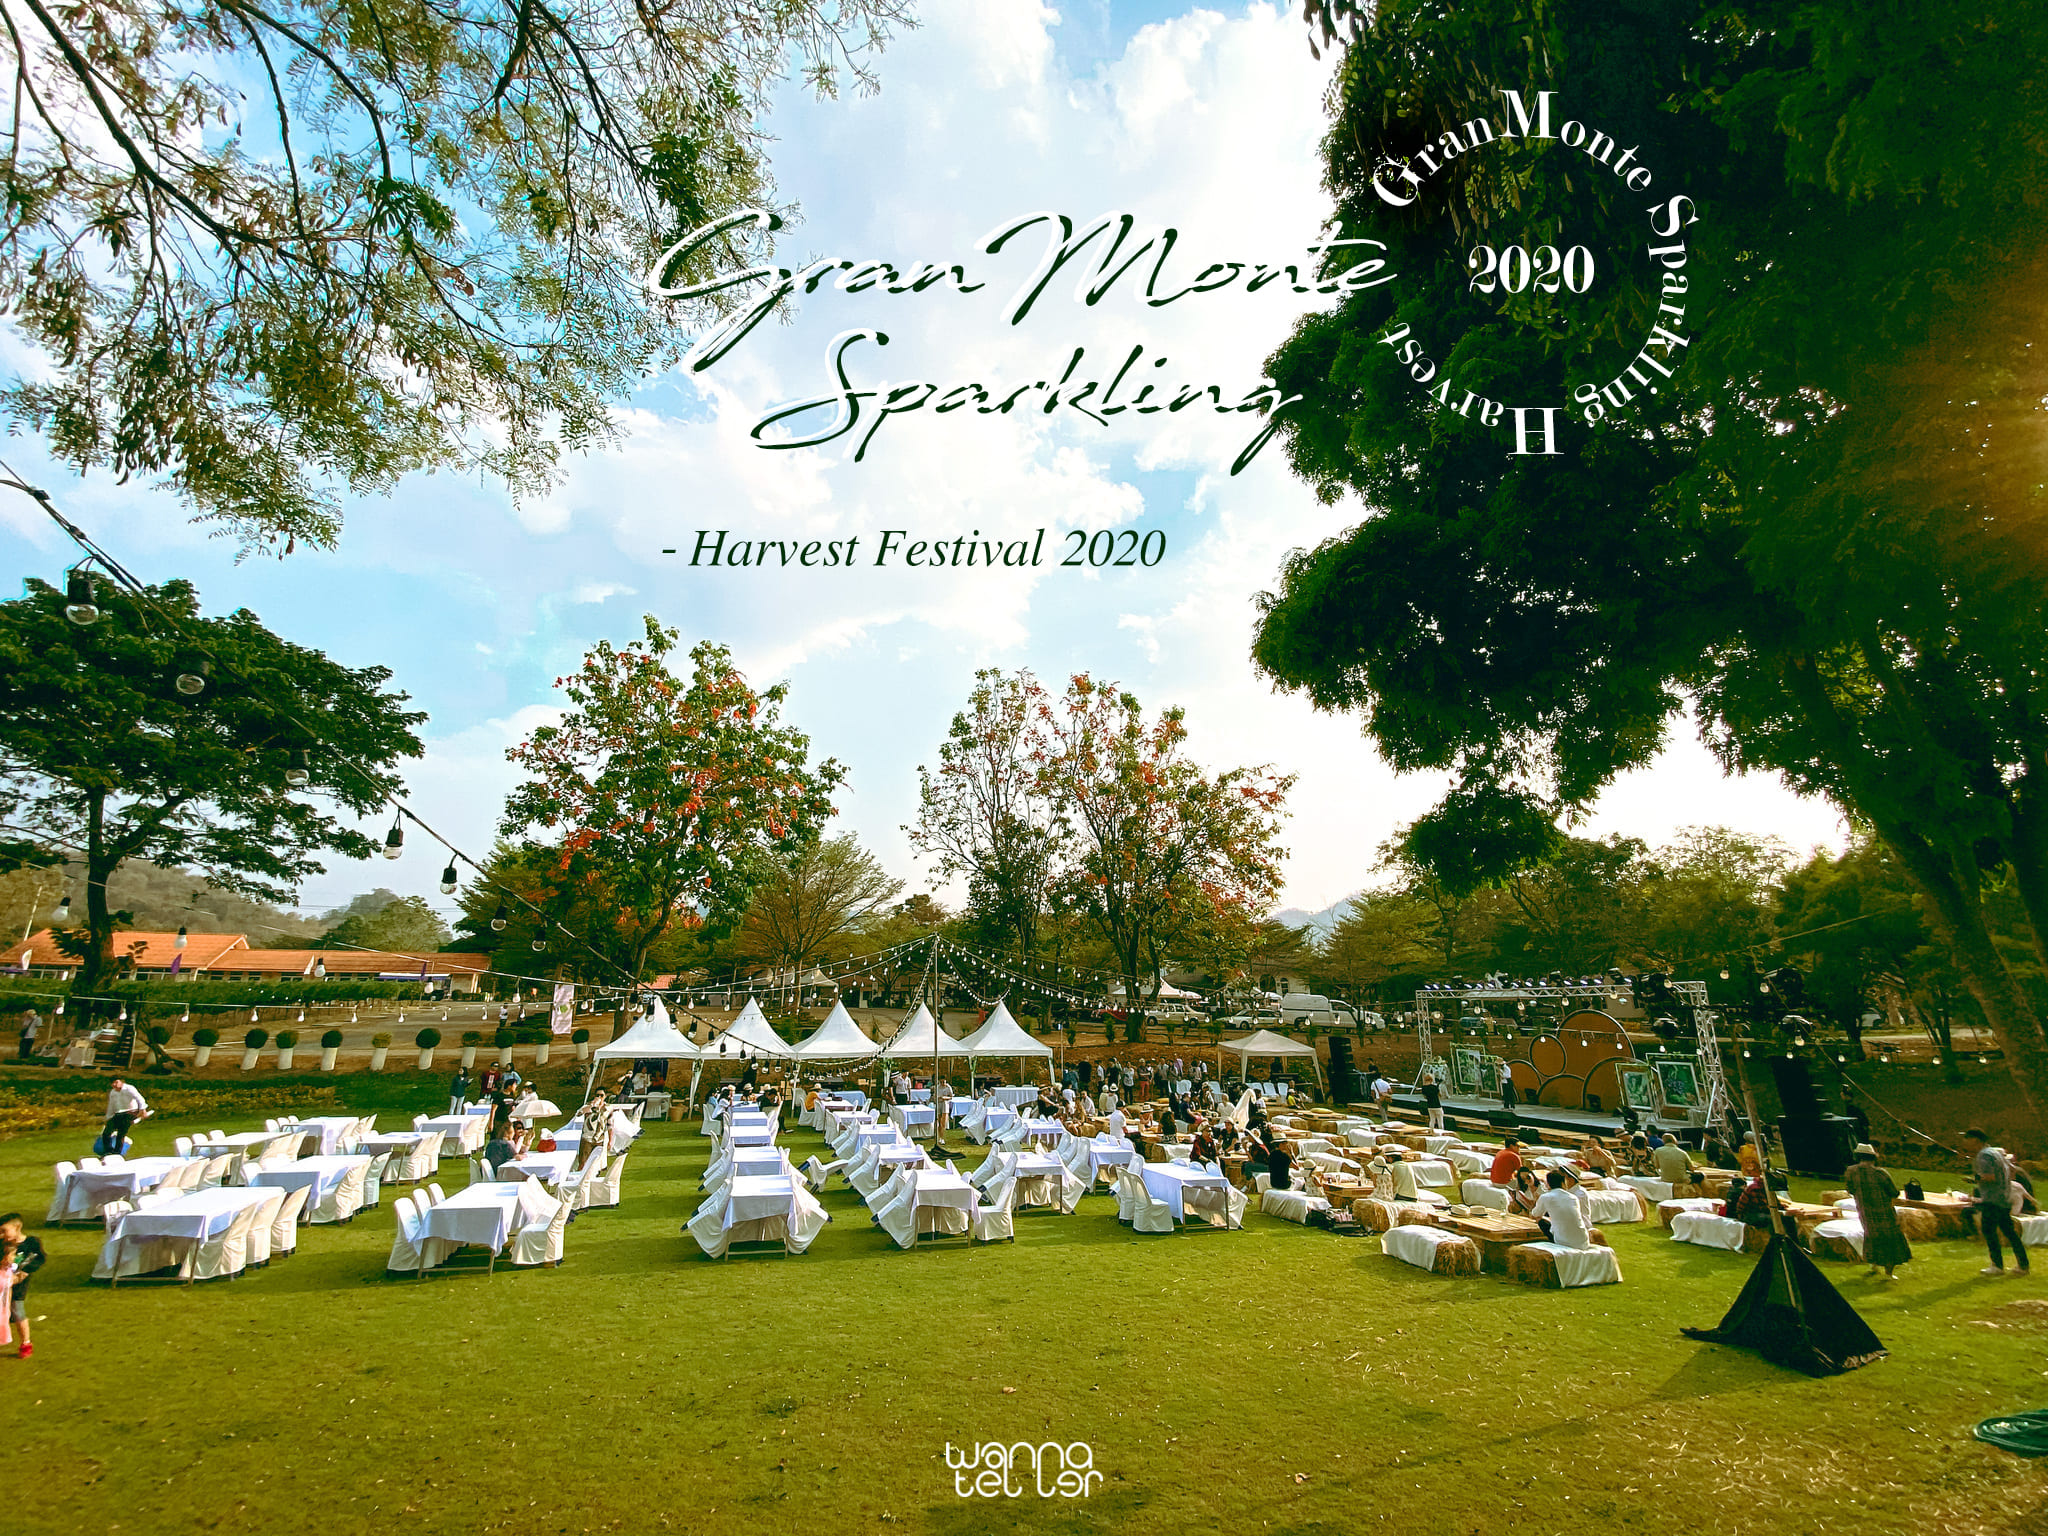 “GranMonte Sparkling Harvest Festival 2020” เทศกาลเก็บองุ่นครั้งแรกของเรา